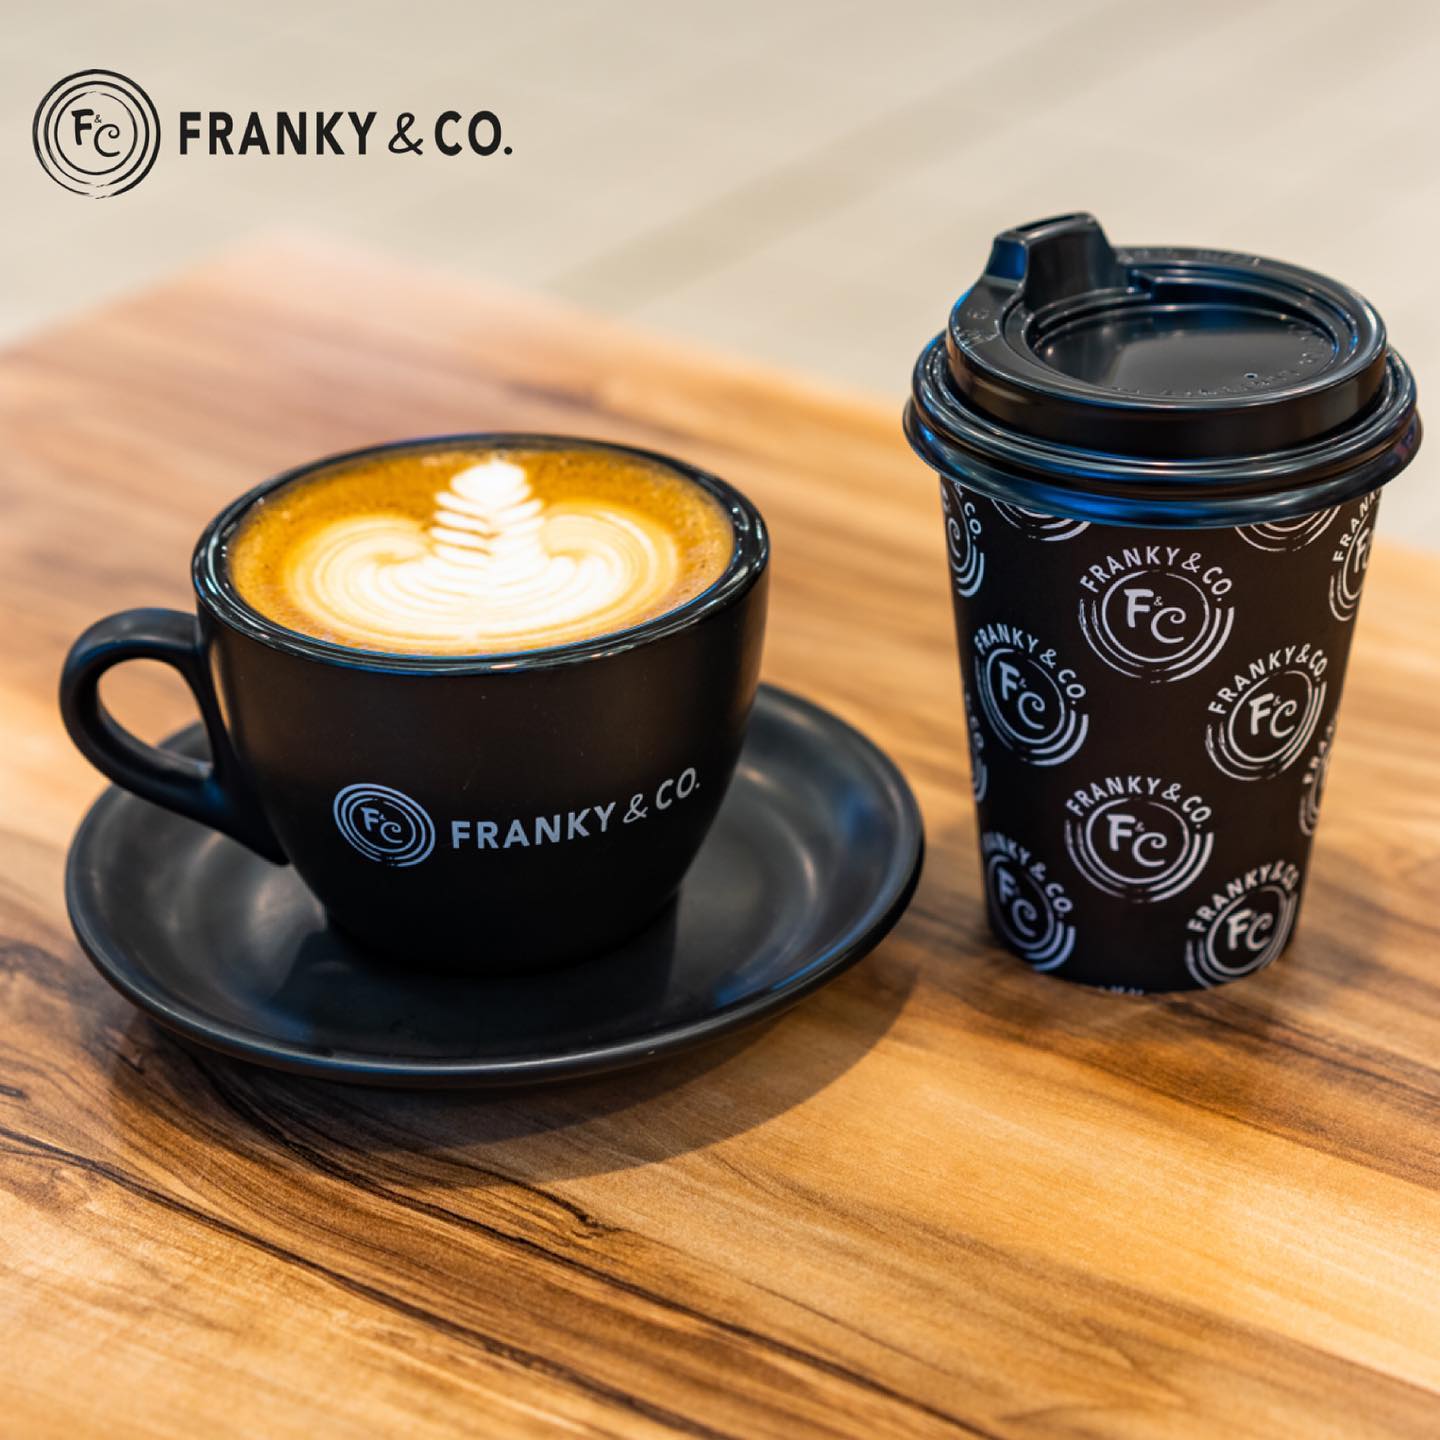 Franky & Co Coffee.jpg